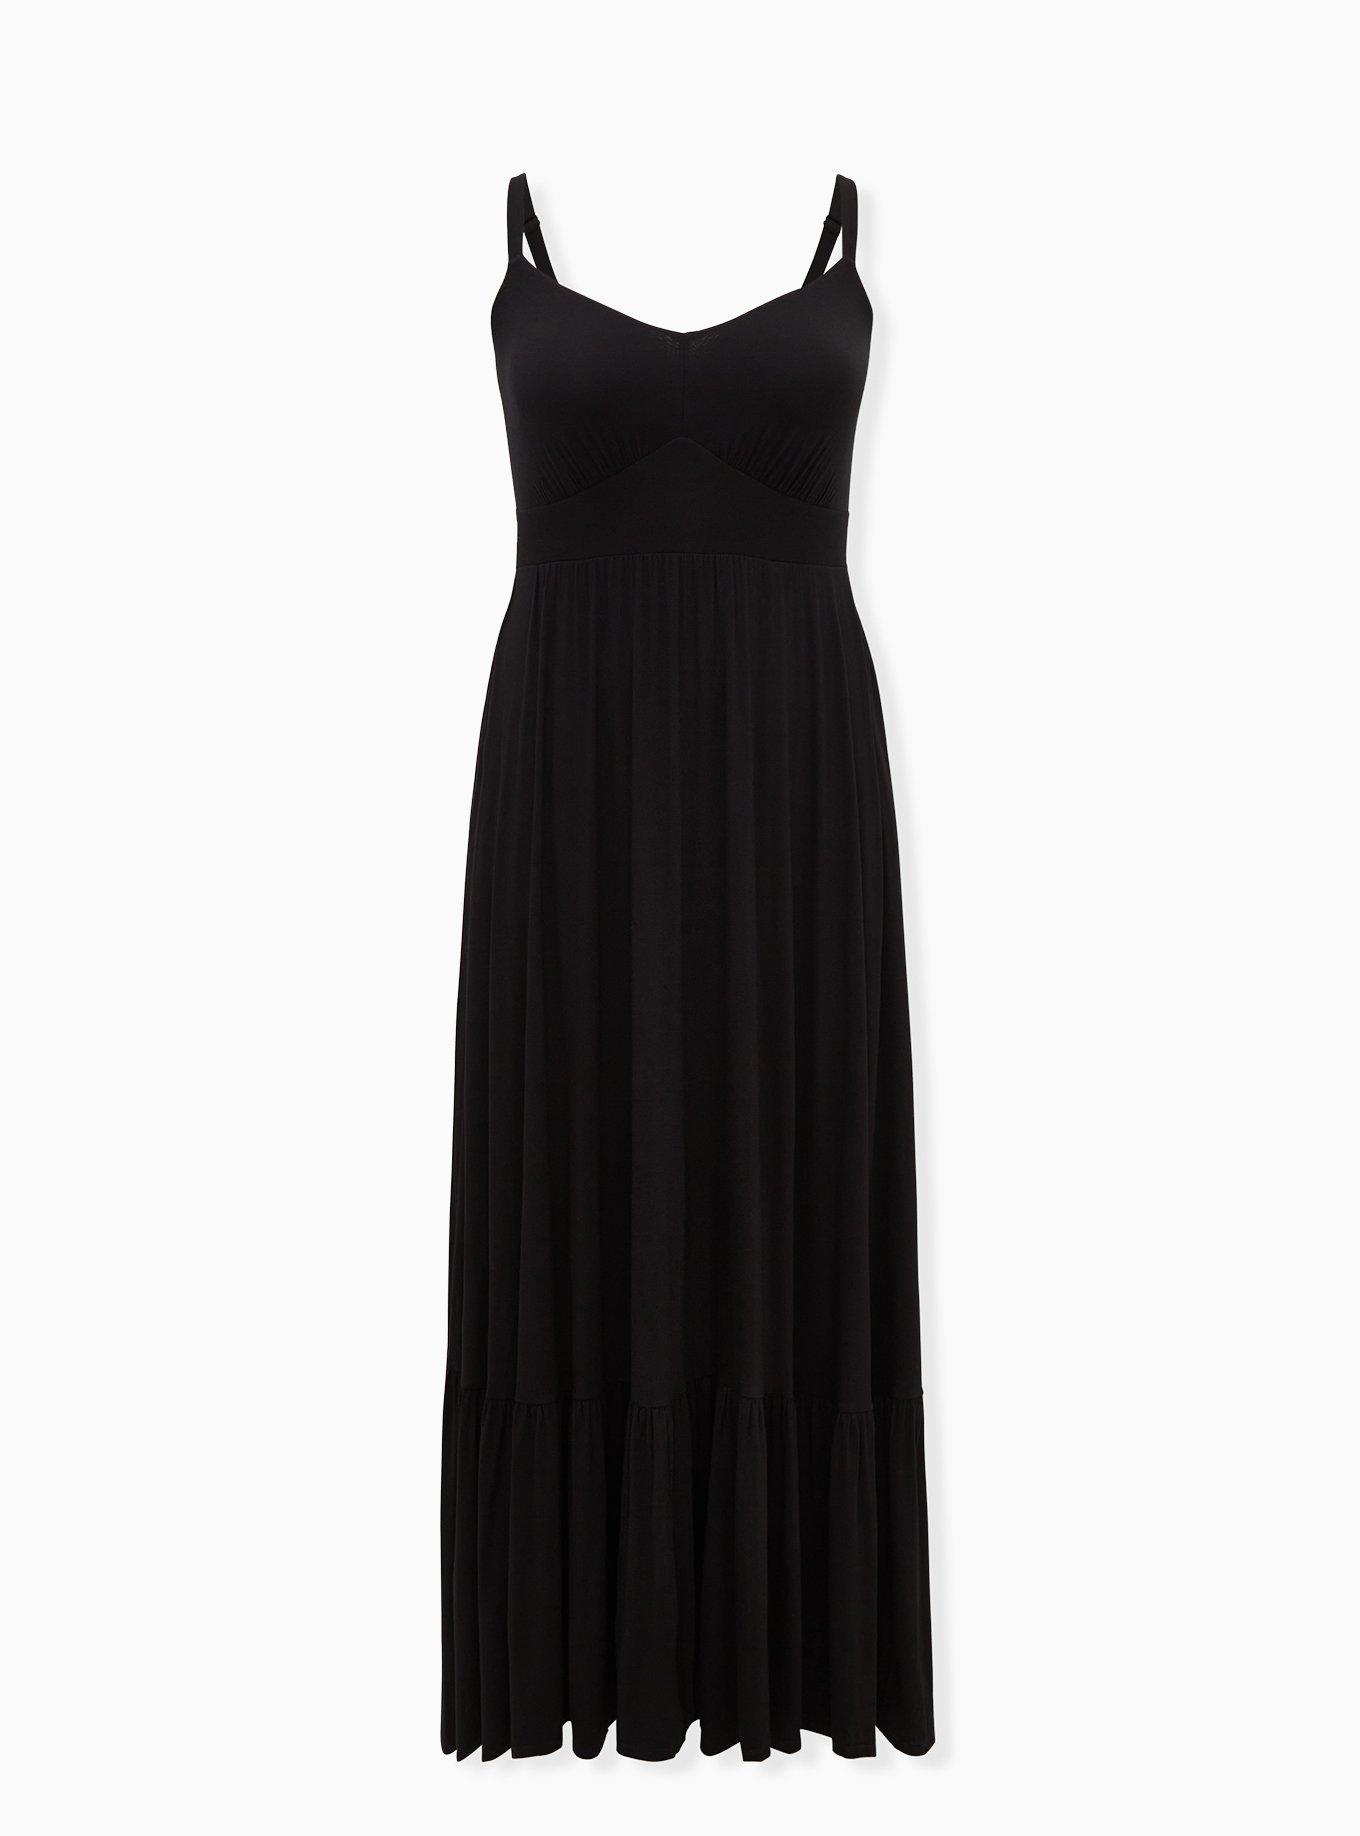 torrid, Dresses, Torrid Black Maxi Dress Size 8 2x